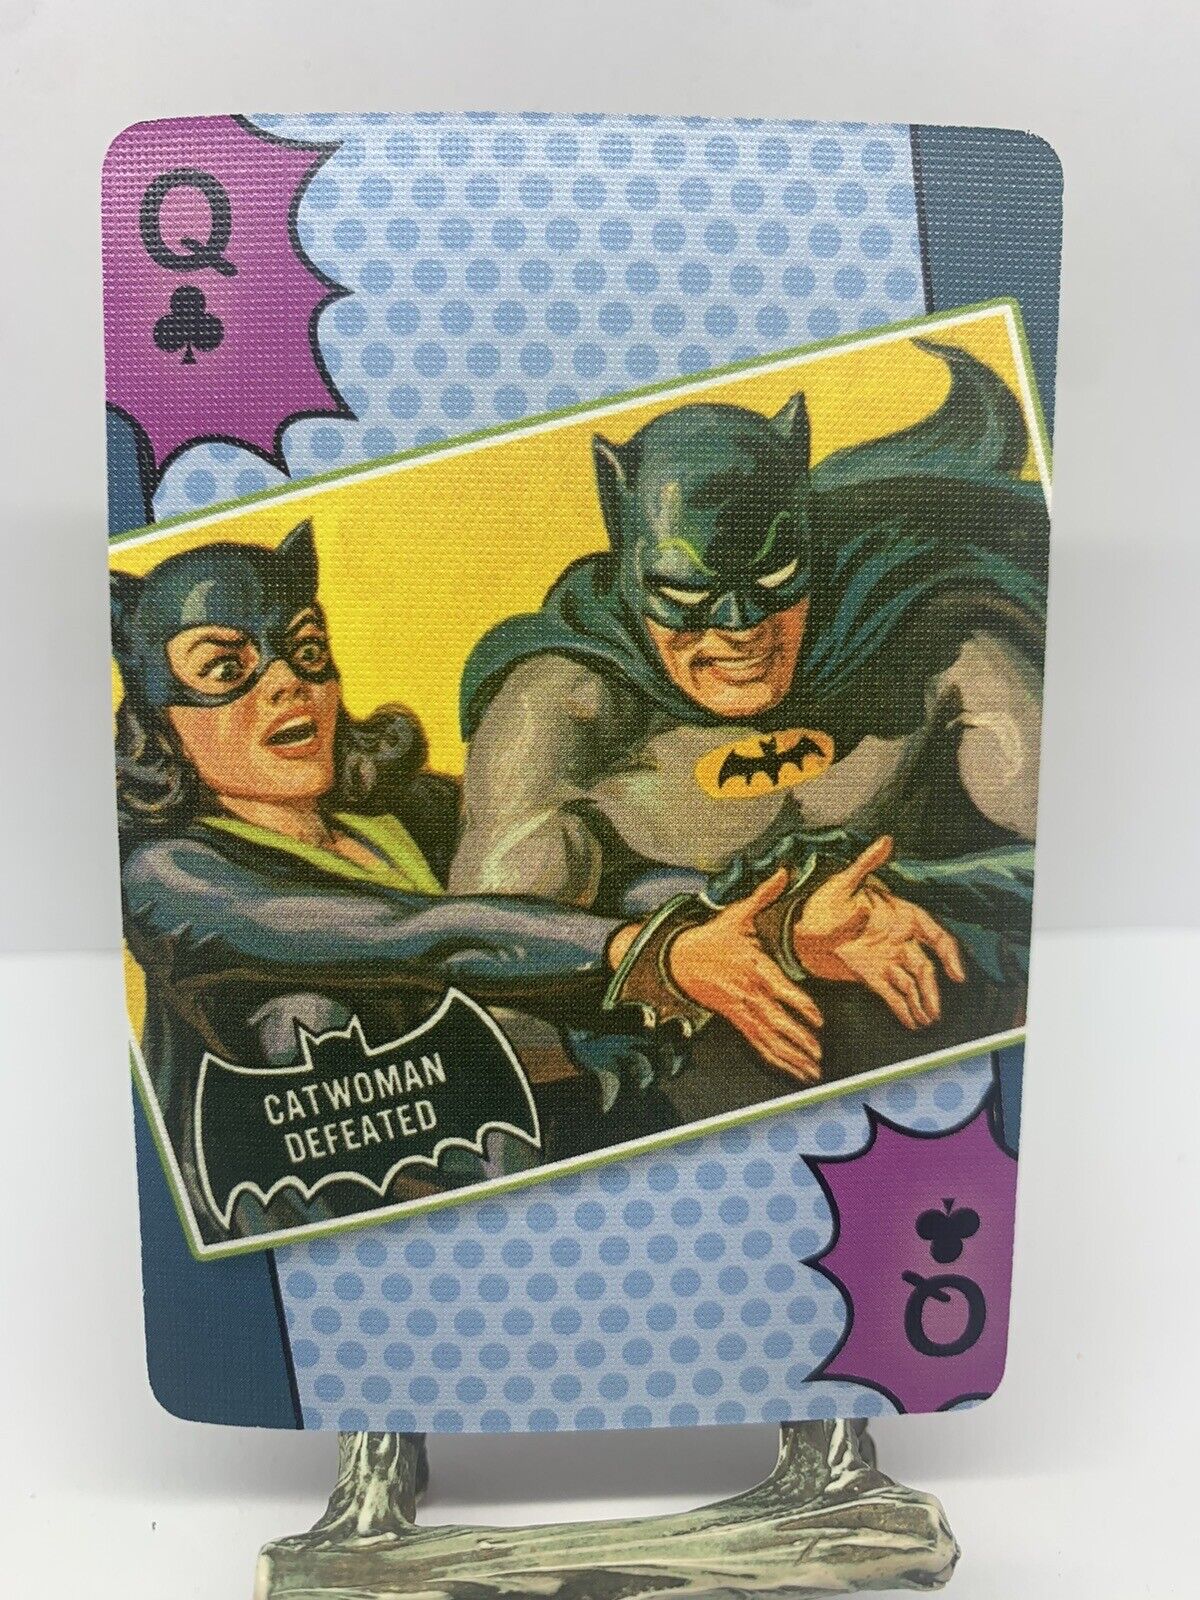 Vintage Batman DC Comics Poker Card - Queen Clubs Cat Woman Defeated